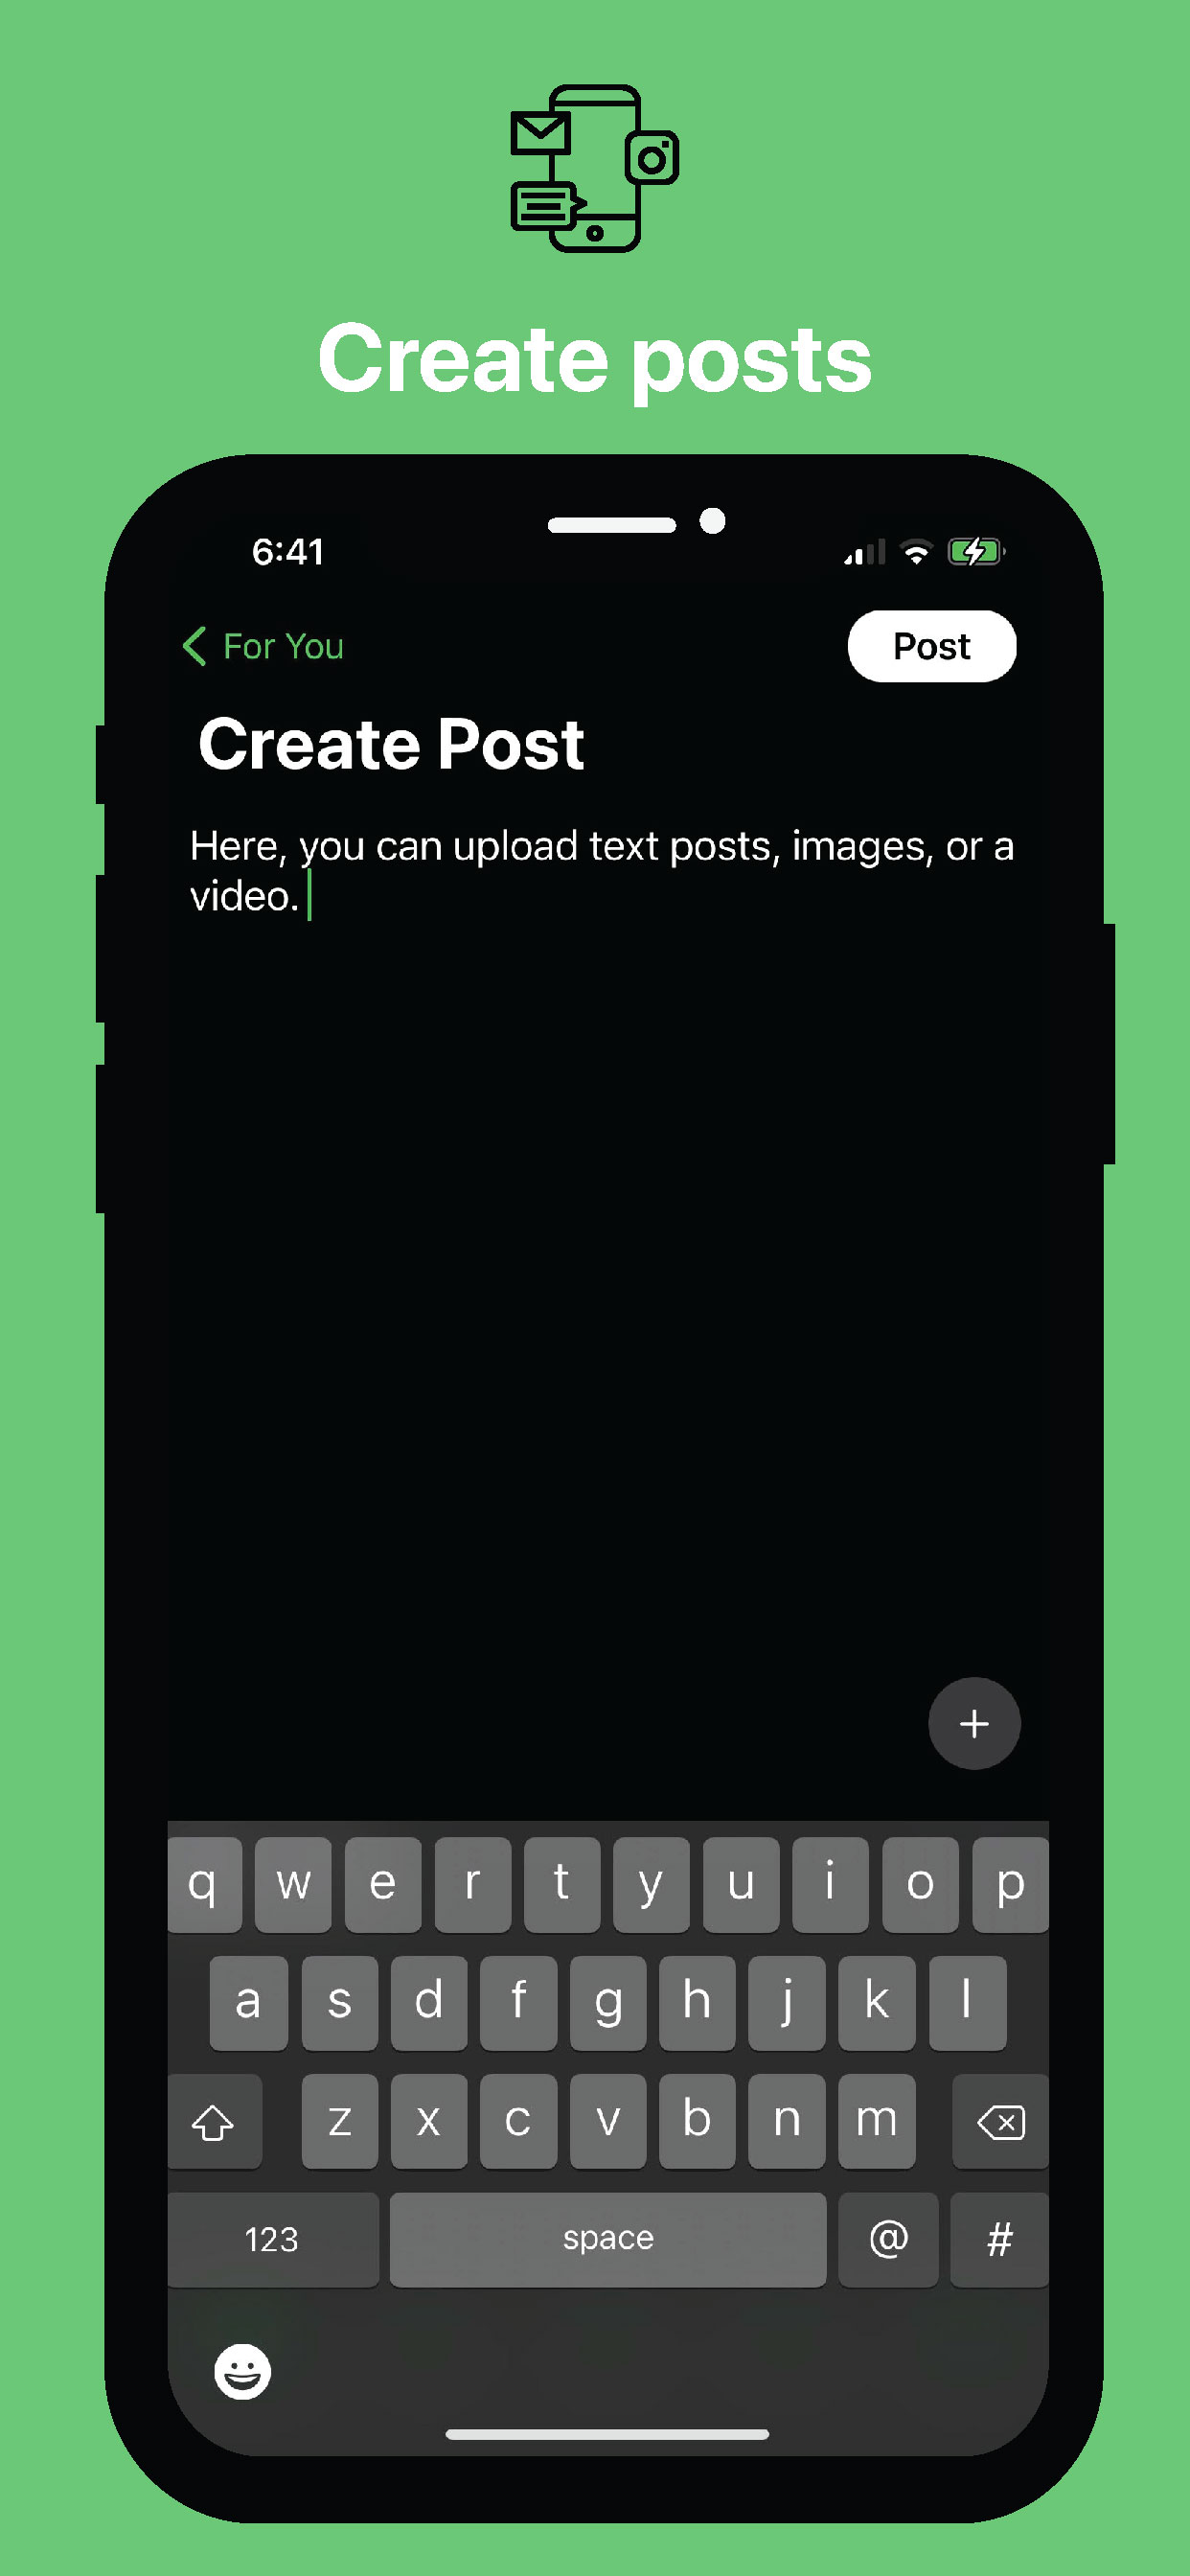 Create posts